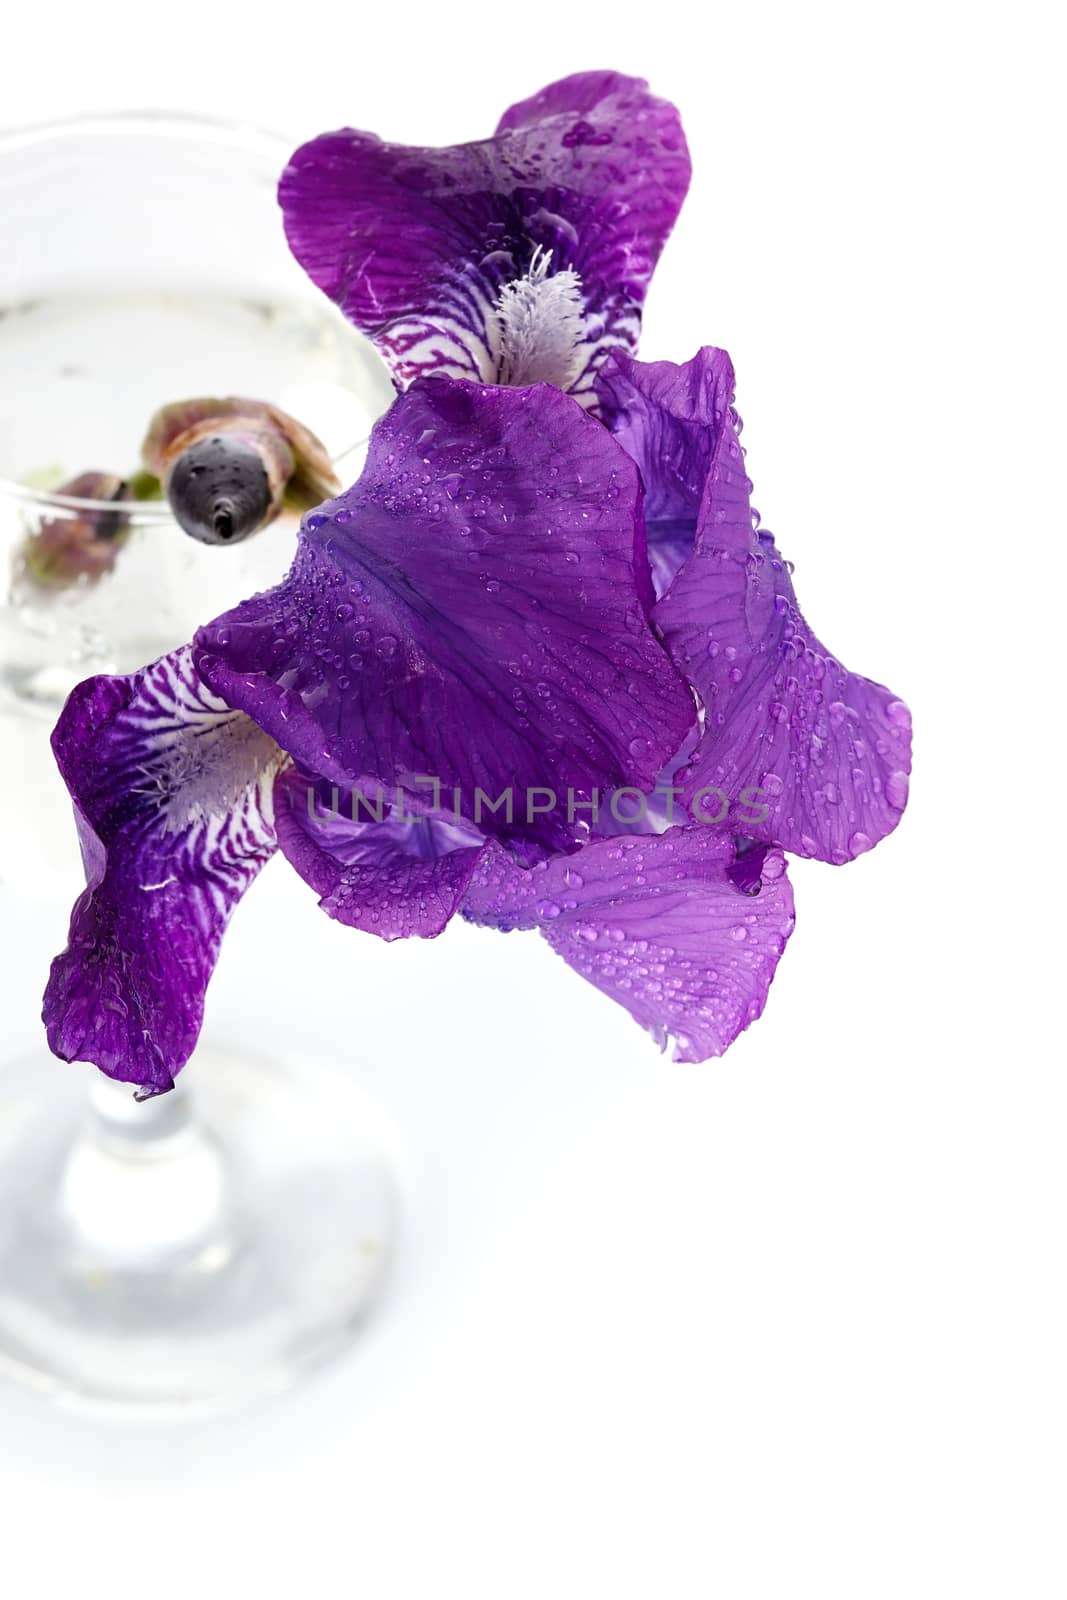 Violet Iris flower in a glass. by Azaliya